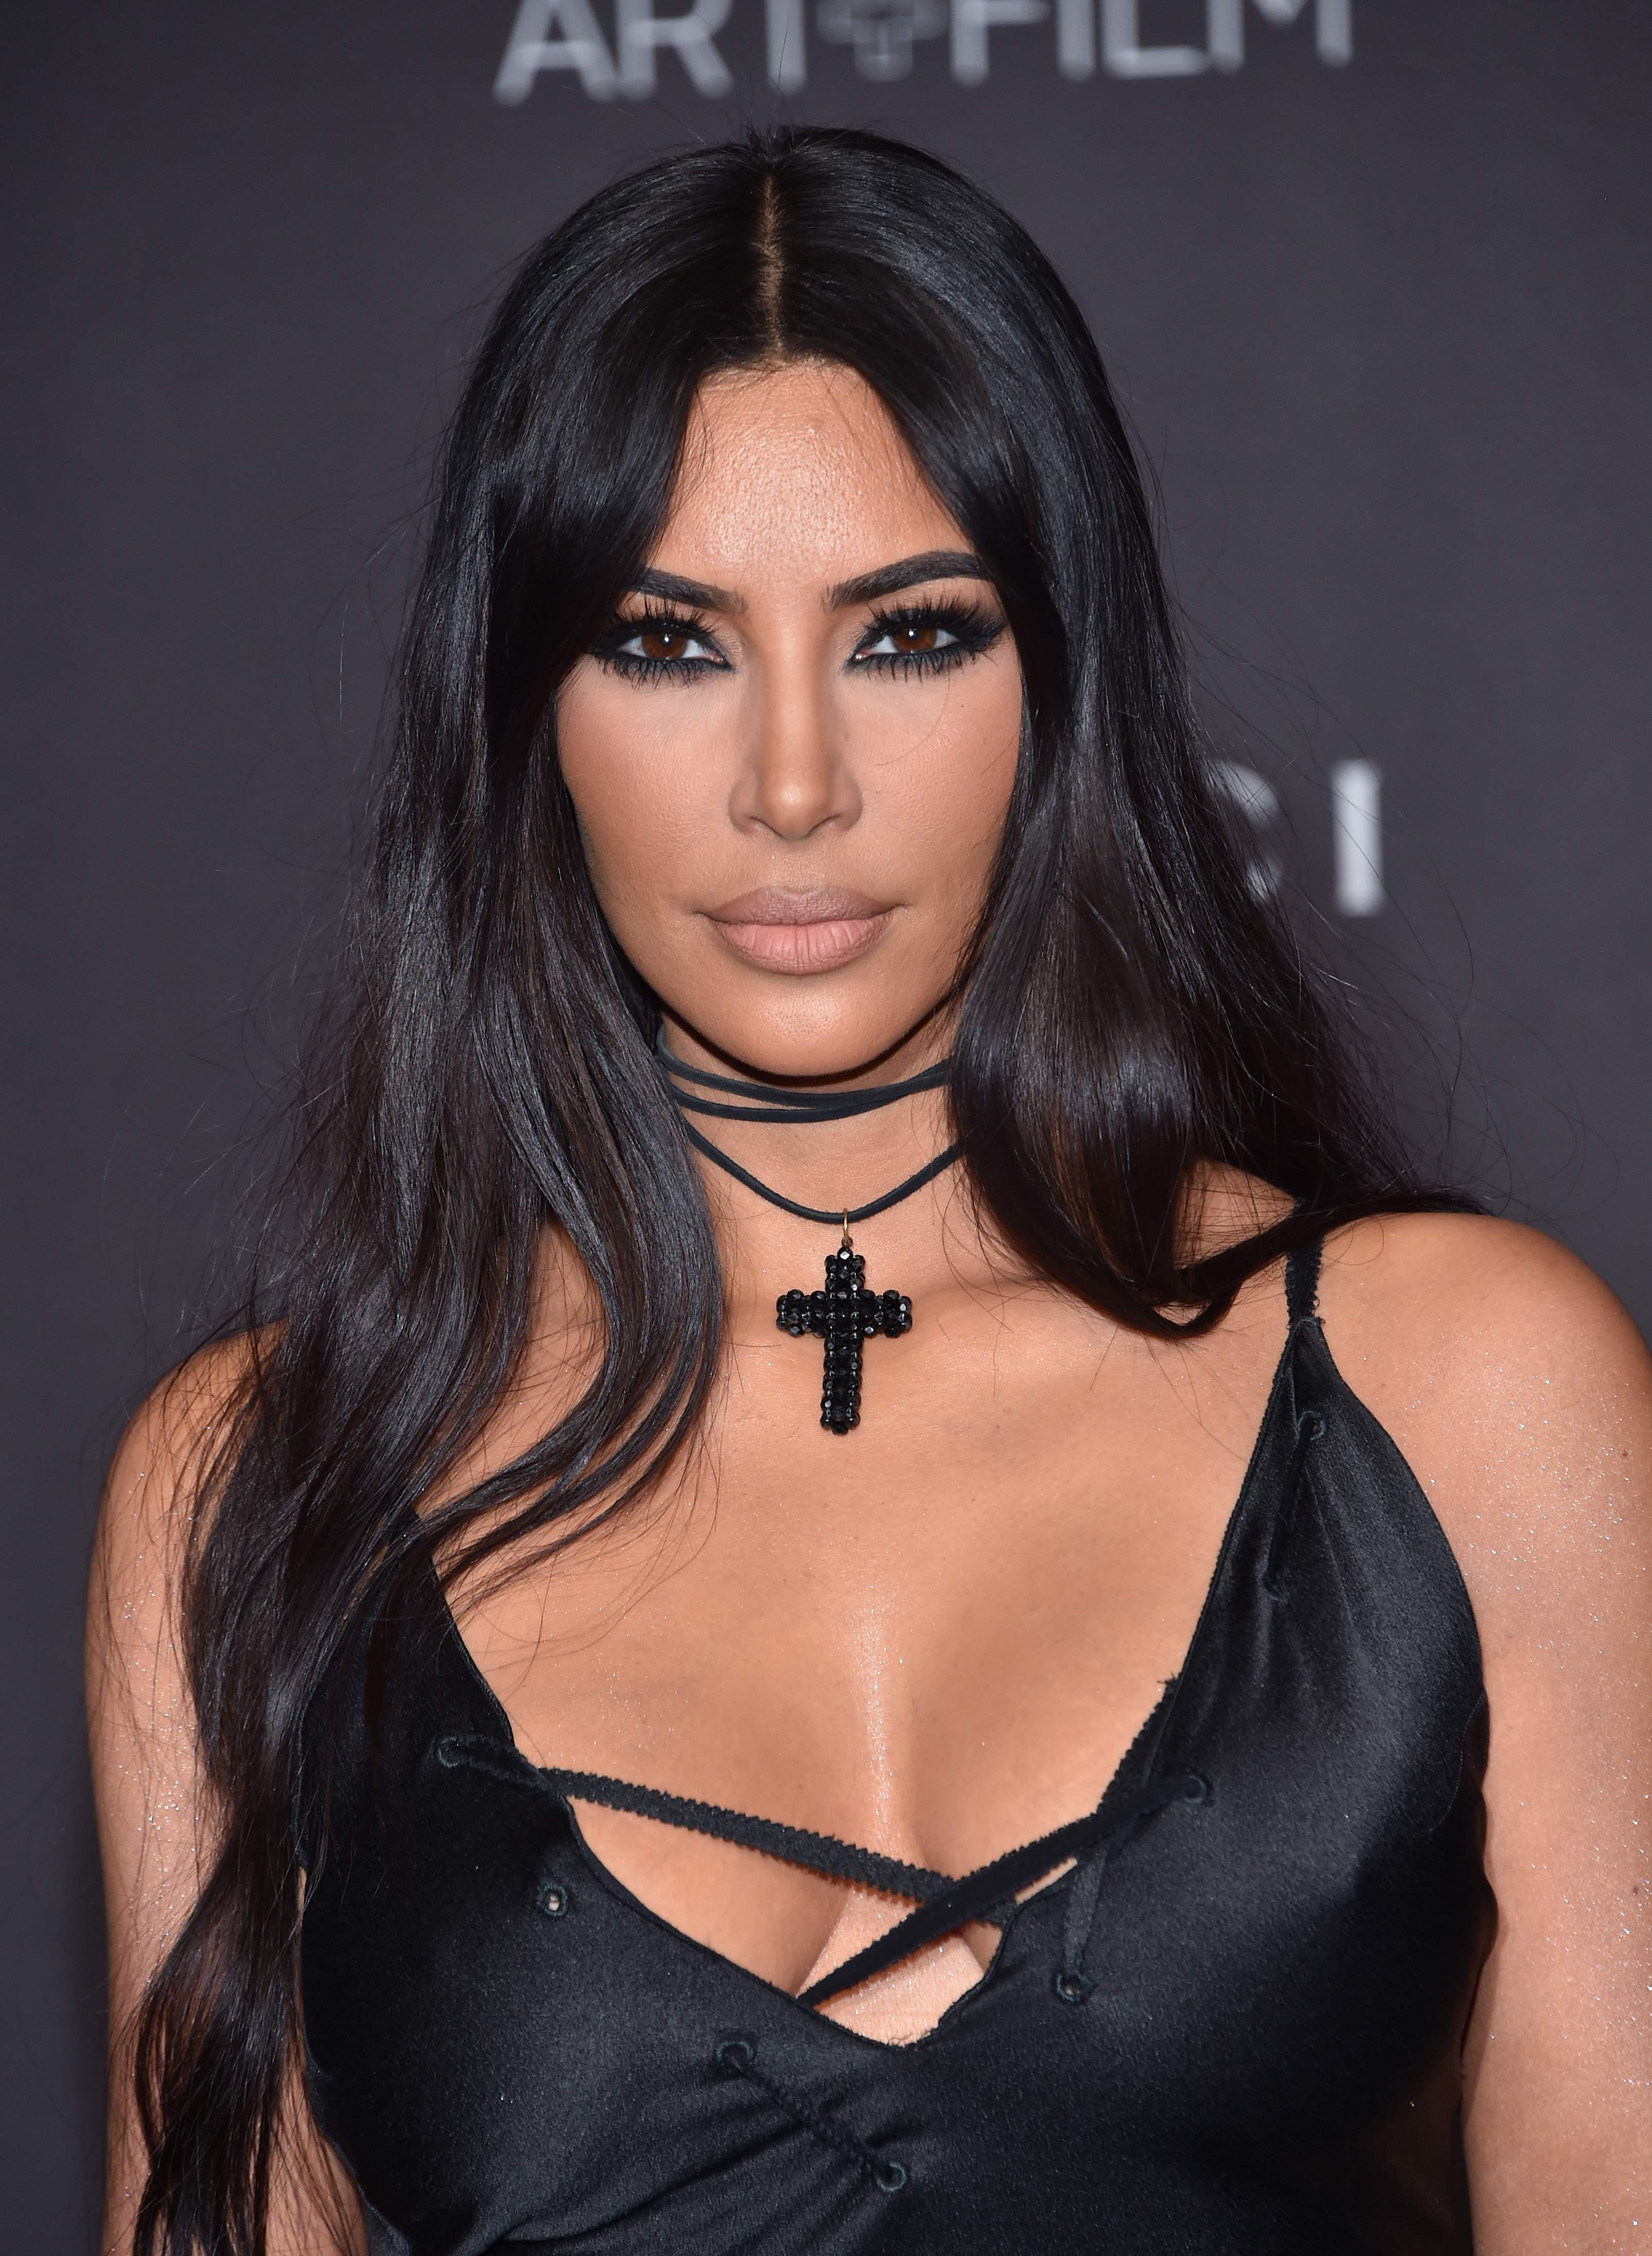 Kim Kardashian's first marriage revelation: 'I got married on ecstasy'